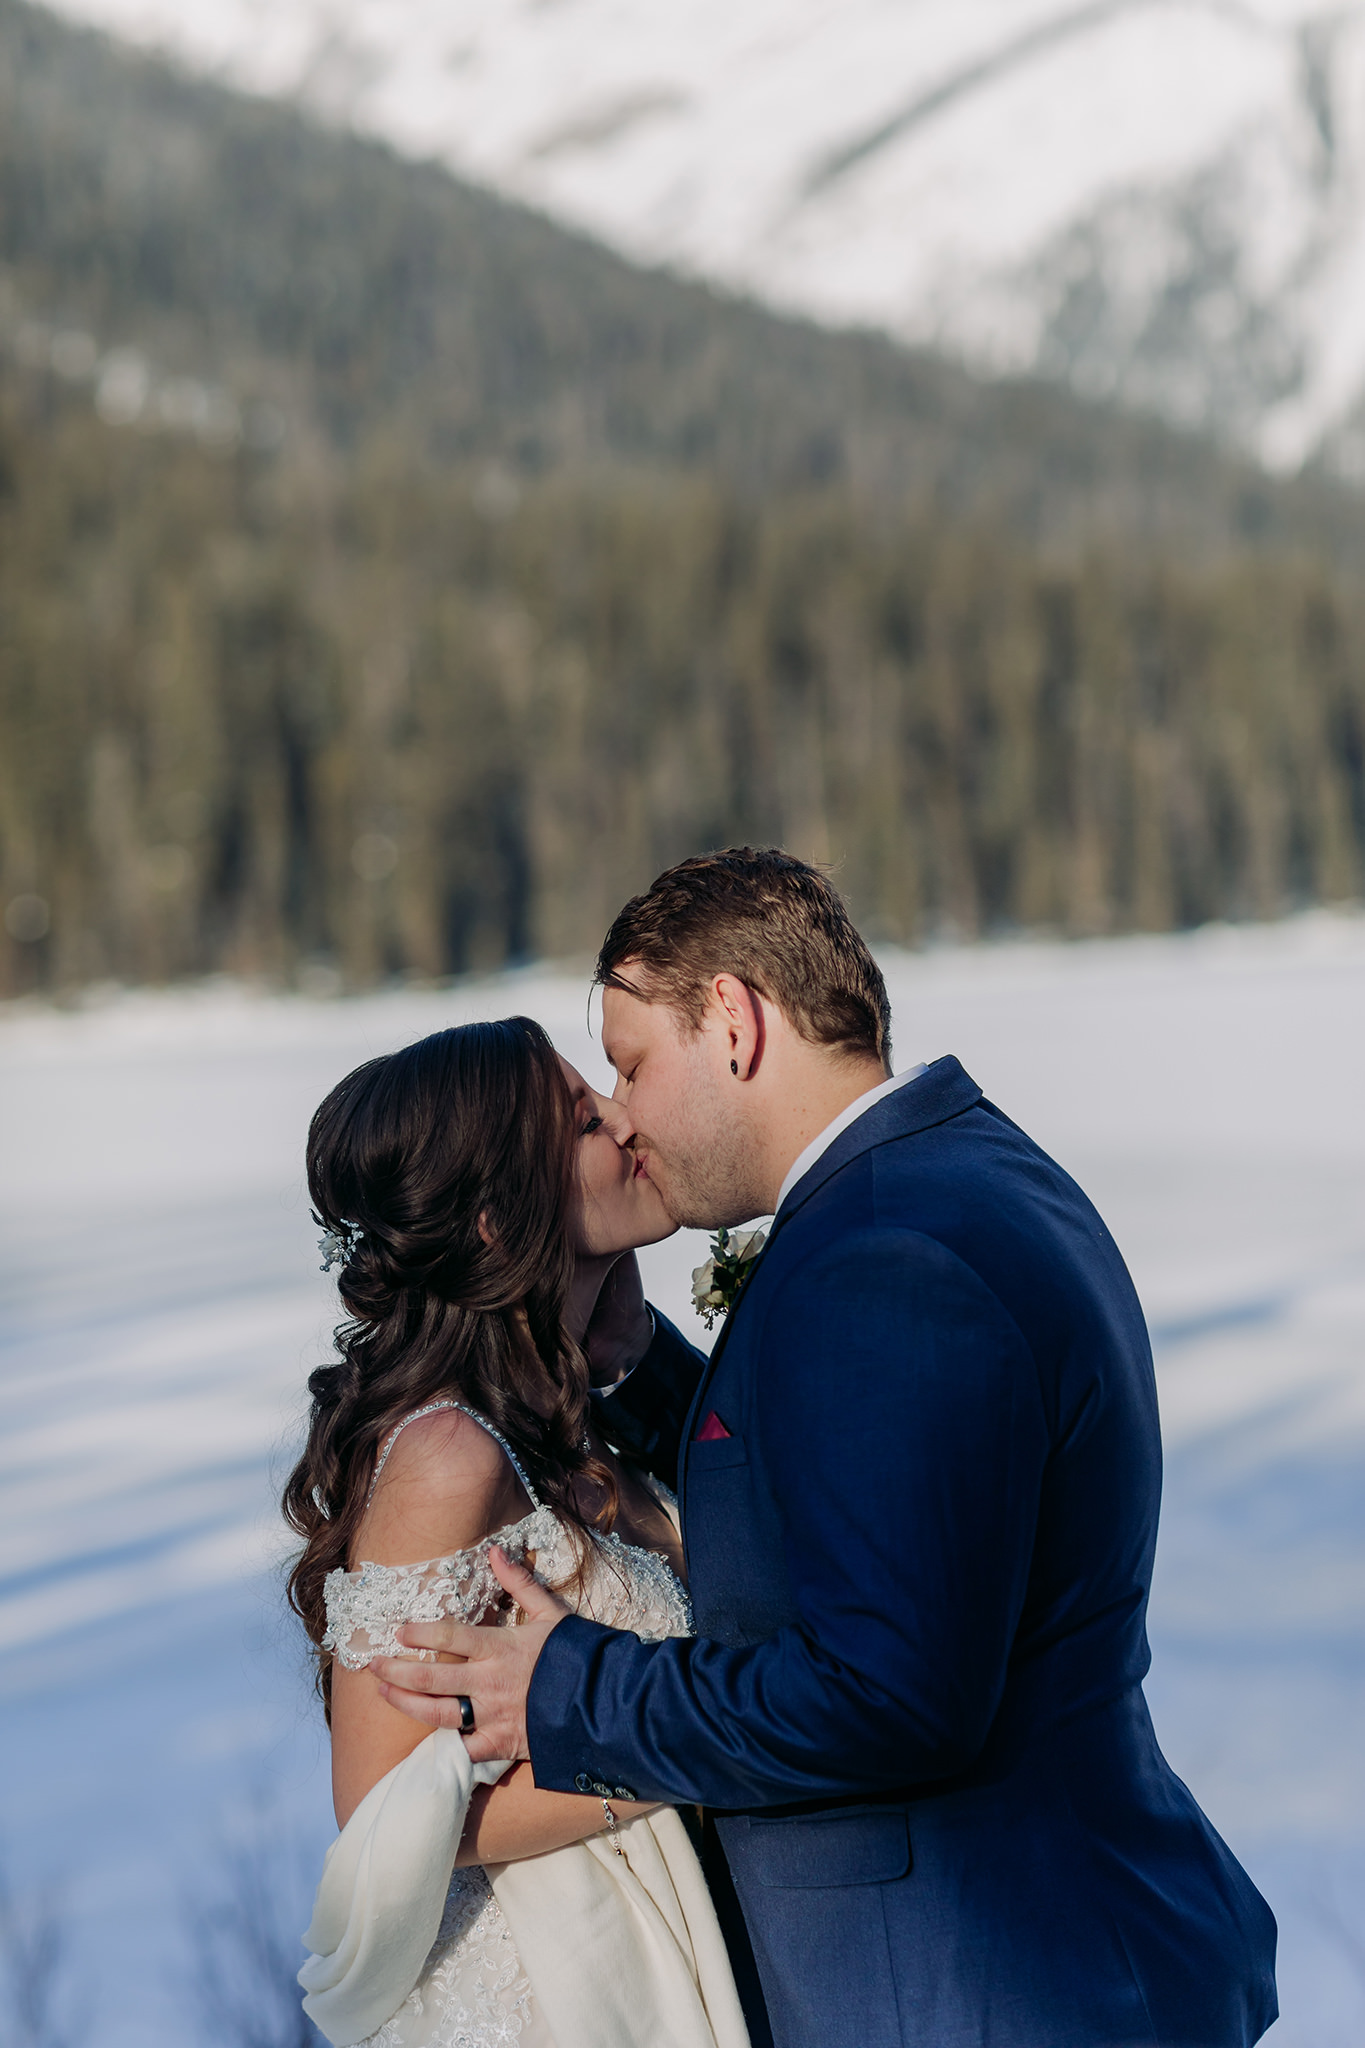 november wedding at Emerald Lake Lodge in the mountains